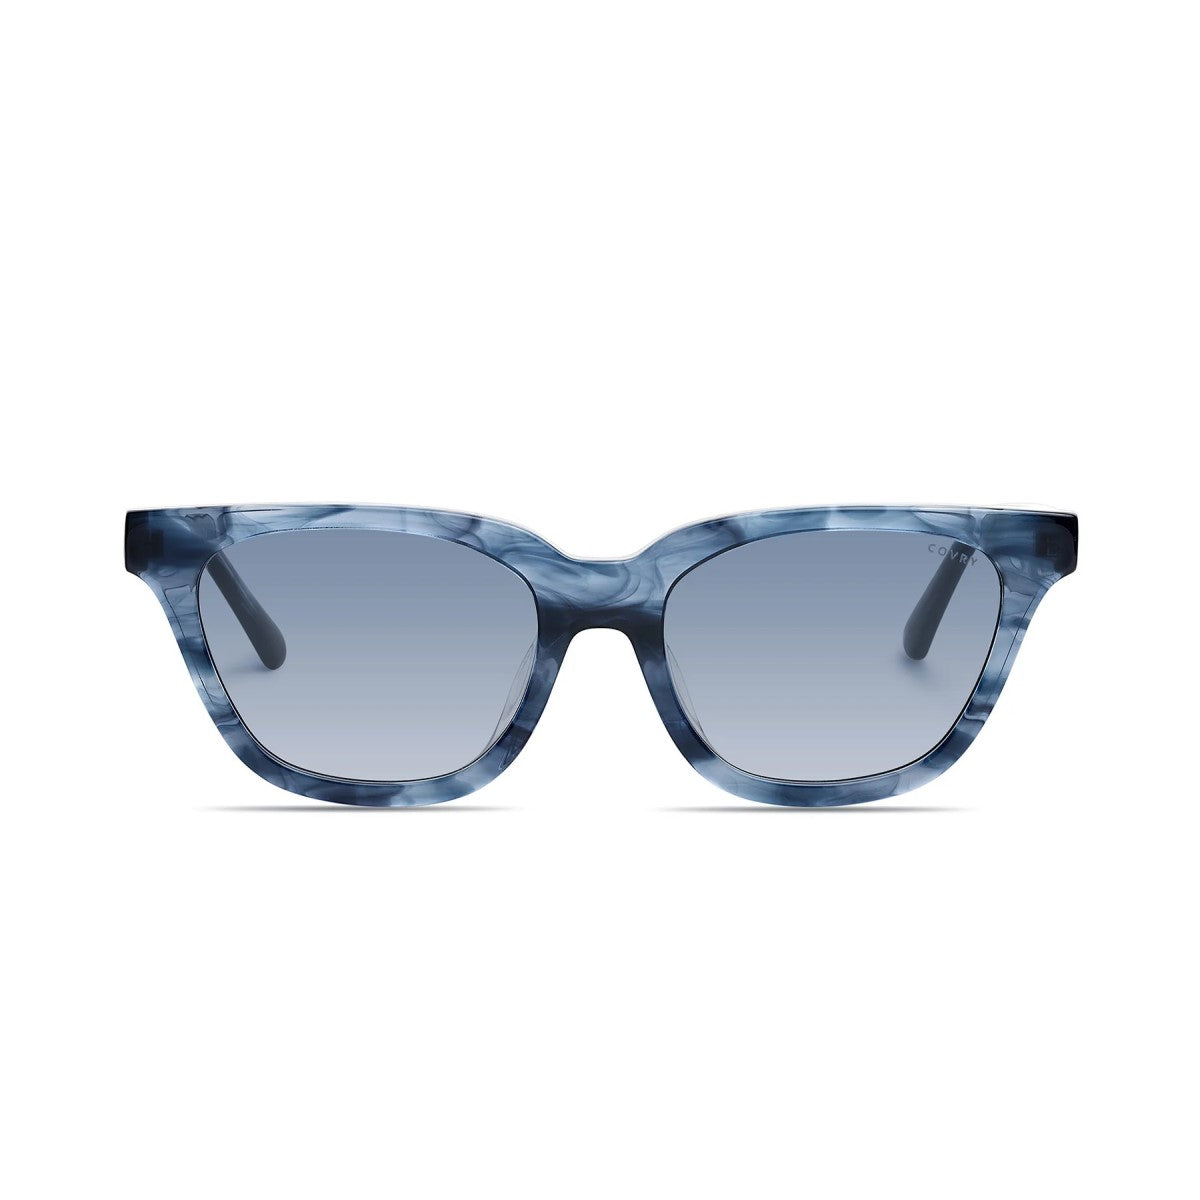 Sunglasses Orca Blue | Karün North America